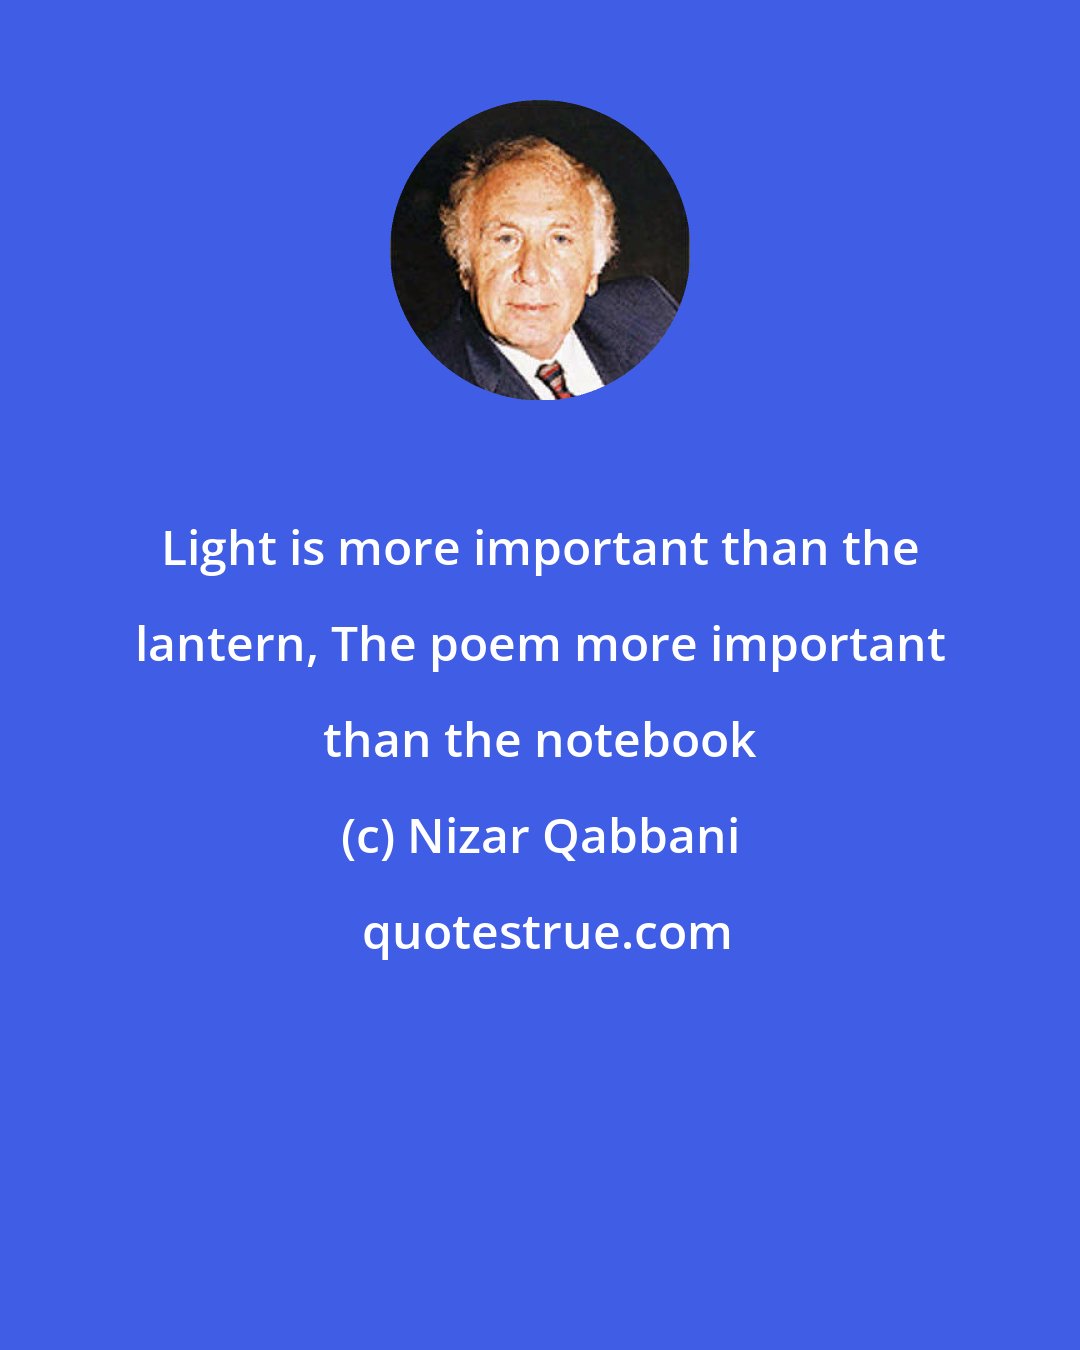 Nizar Qabbani: Light is more important than the lantern, The poem more important than the notebook